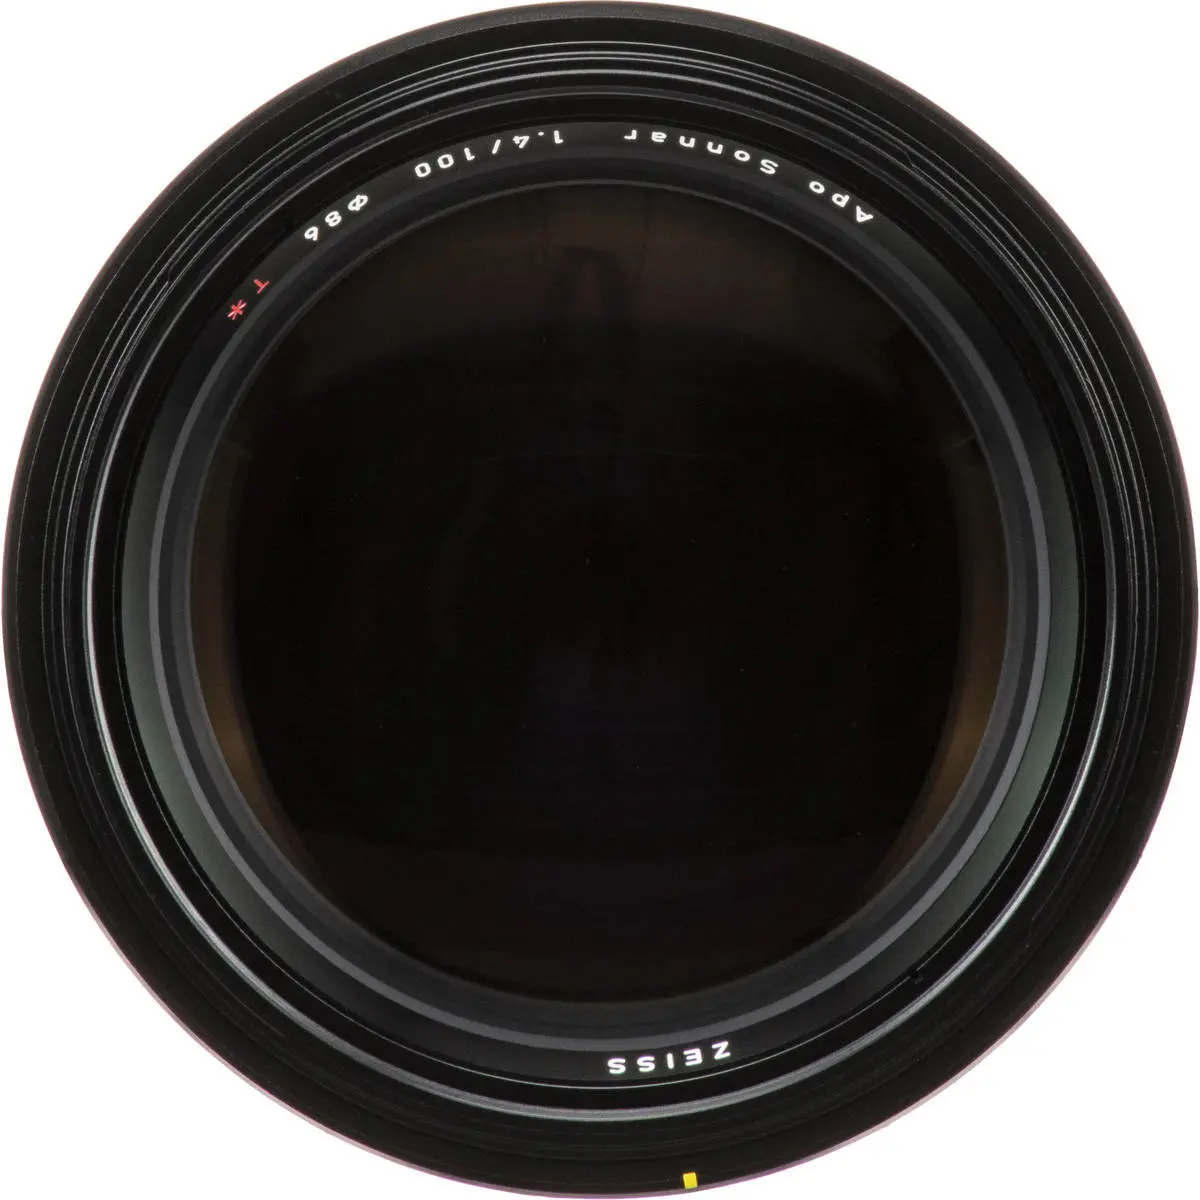 7. Carl Zeiss Otus 1.4/100 ZF.2 (Nikon) Lens